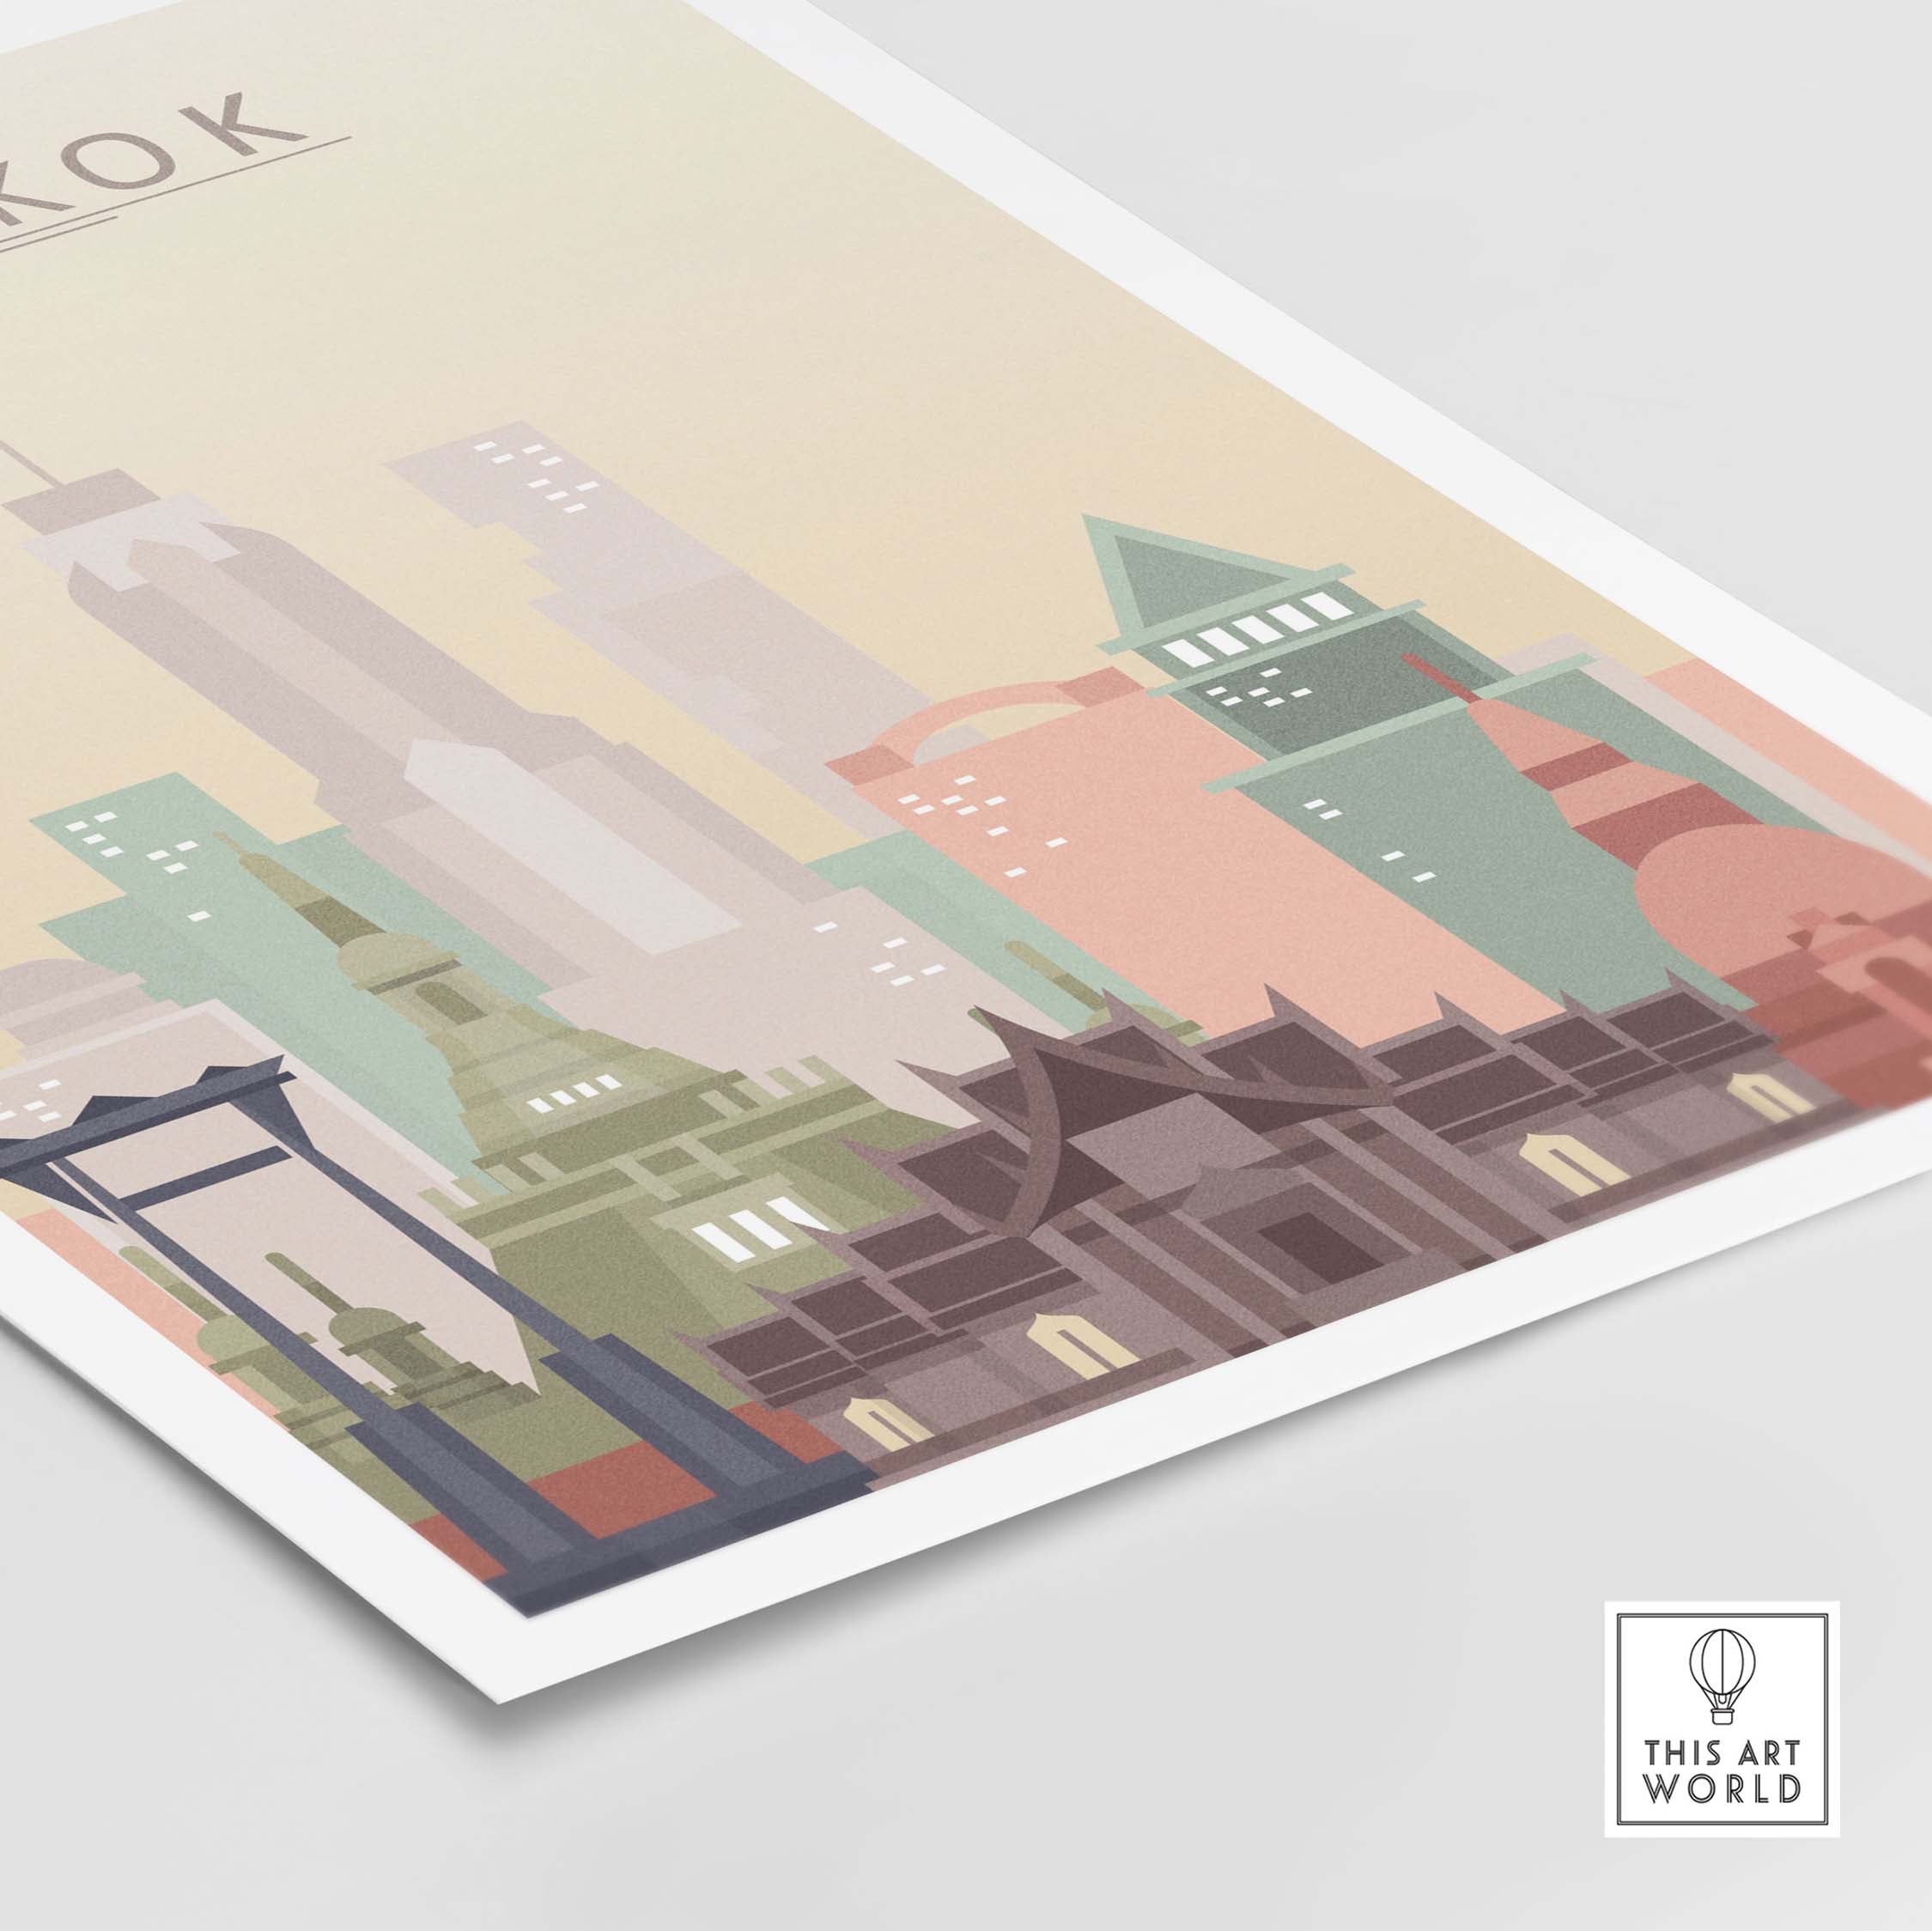 bangkok skyline poster print | this art world